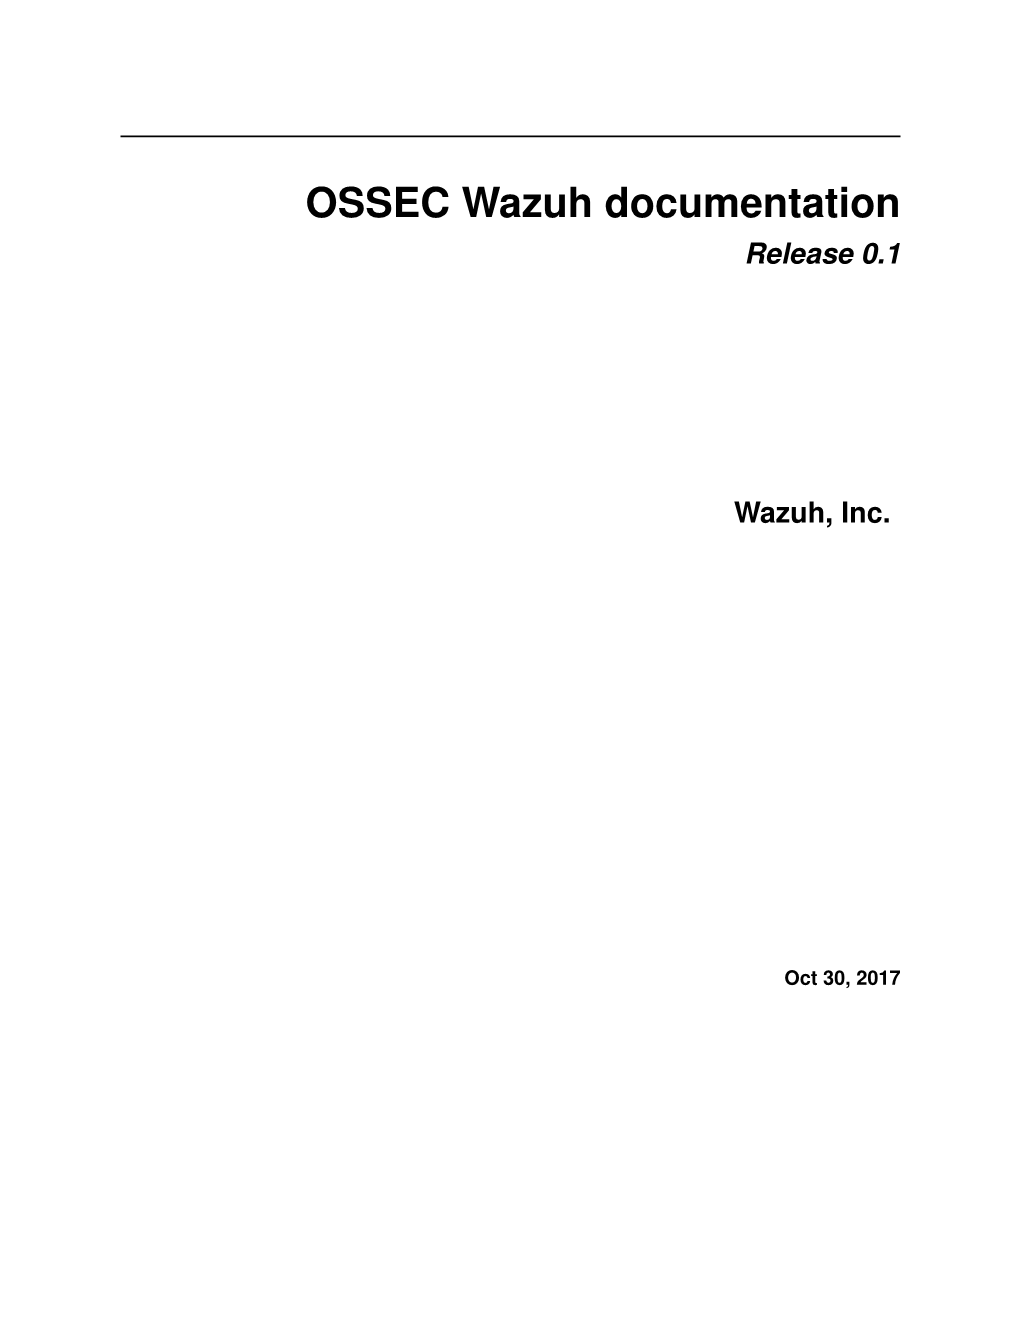 OSSEC Wazuh Documentation Release 0.1